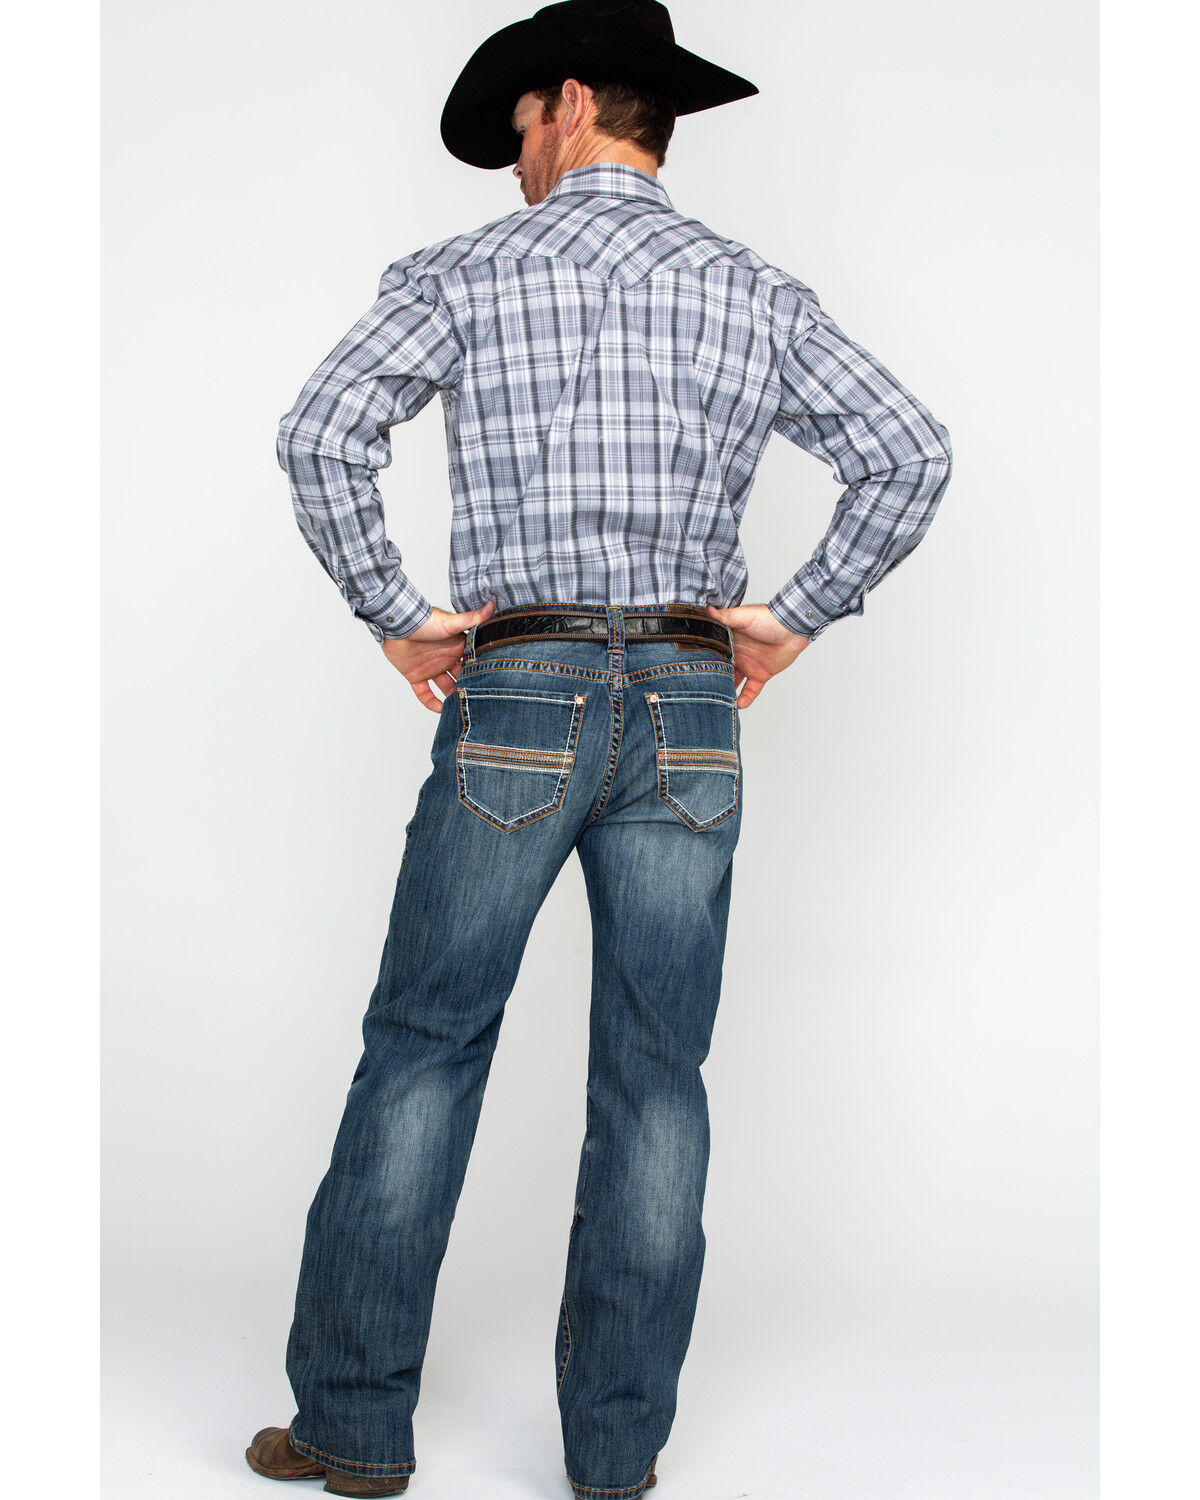 mens cowboy jeans